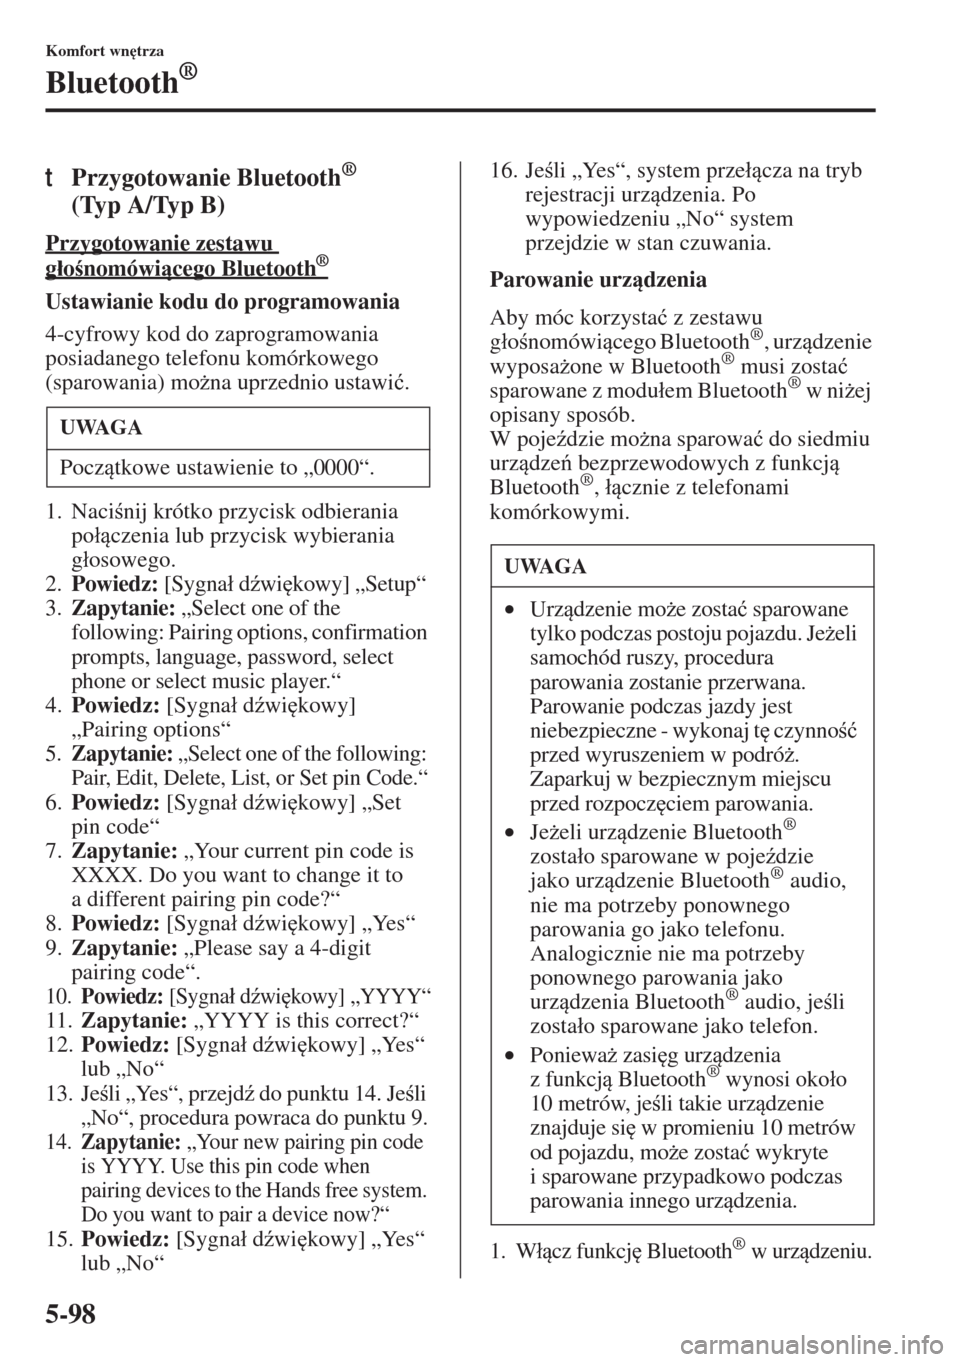 MAZDA MODEL 3 HATCHBACK 2015  Instrukcja Obsługi (in Polish) 5-98
Komfort wn
trza
Bluetooth®
tPrzygotowanie Bluetooth® 
(Typ A/Typ B)
Przygotowanie zestawu 
g�áonomówicego Bluetooth   ®
Ustawianie kodu do programowania
4-cyfrowy kod do zaprogramowania